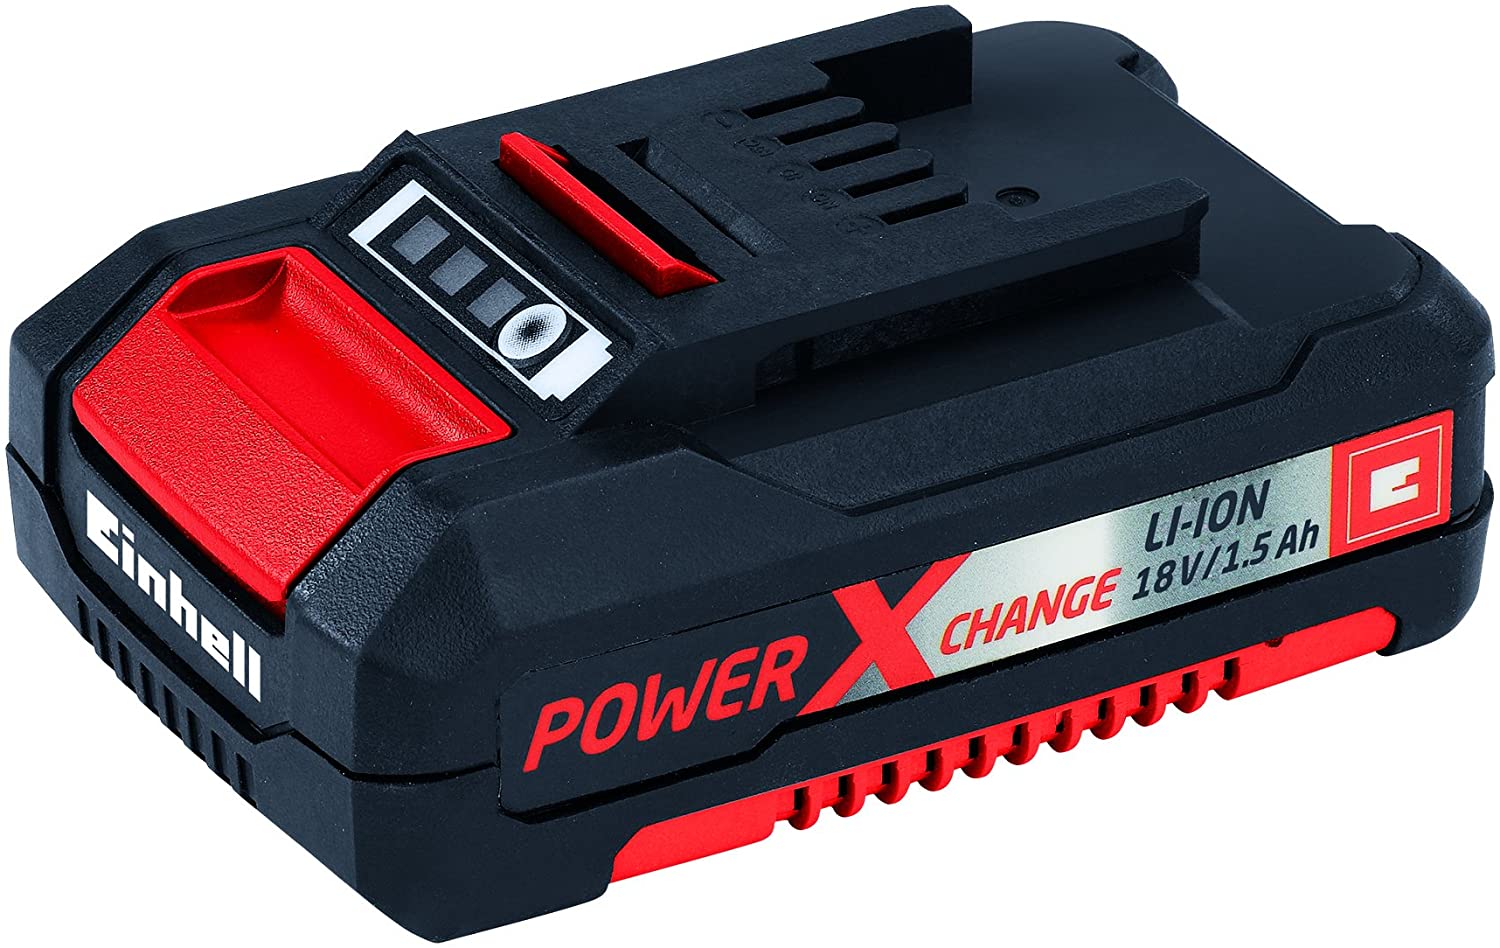 Einhell 4511330 Batteria Power-X-Change, 1.5 Ah, 18 V, Nero, Rosso